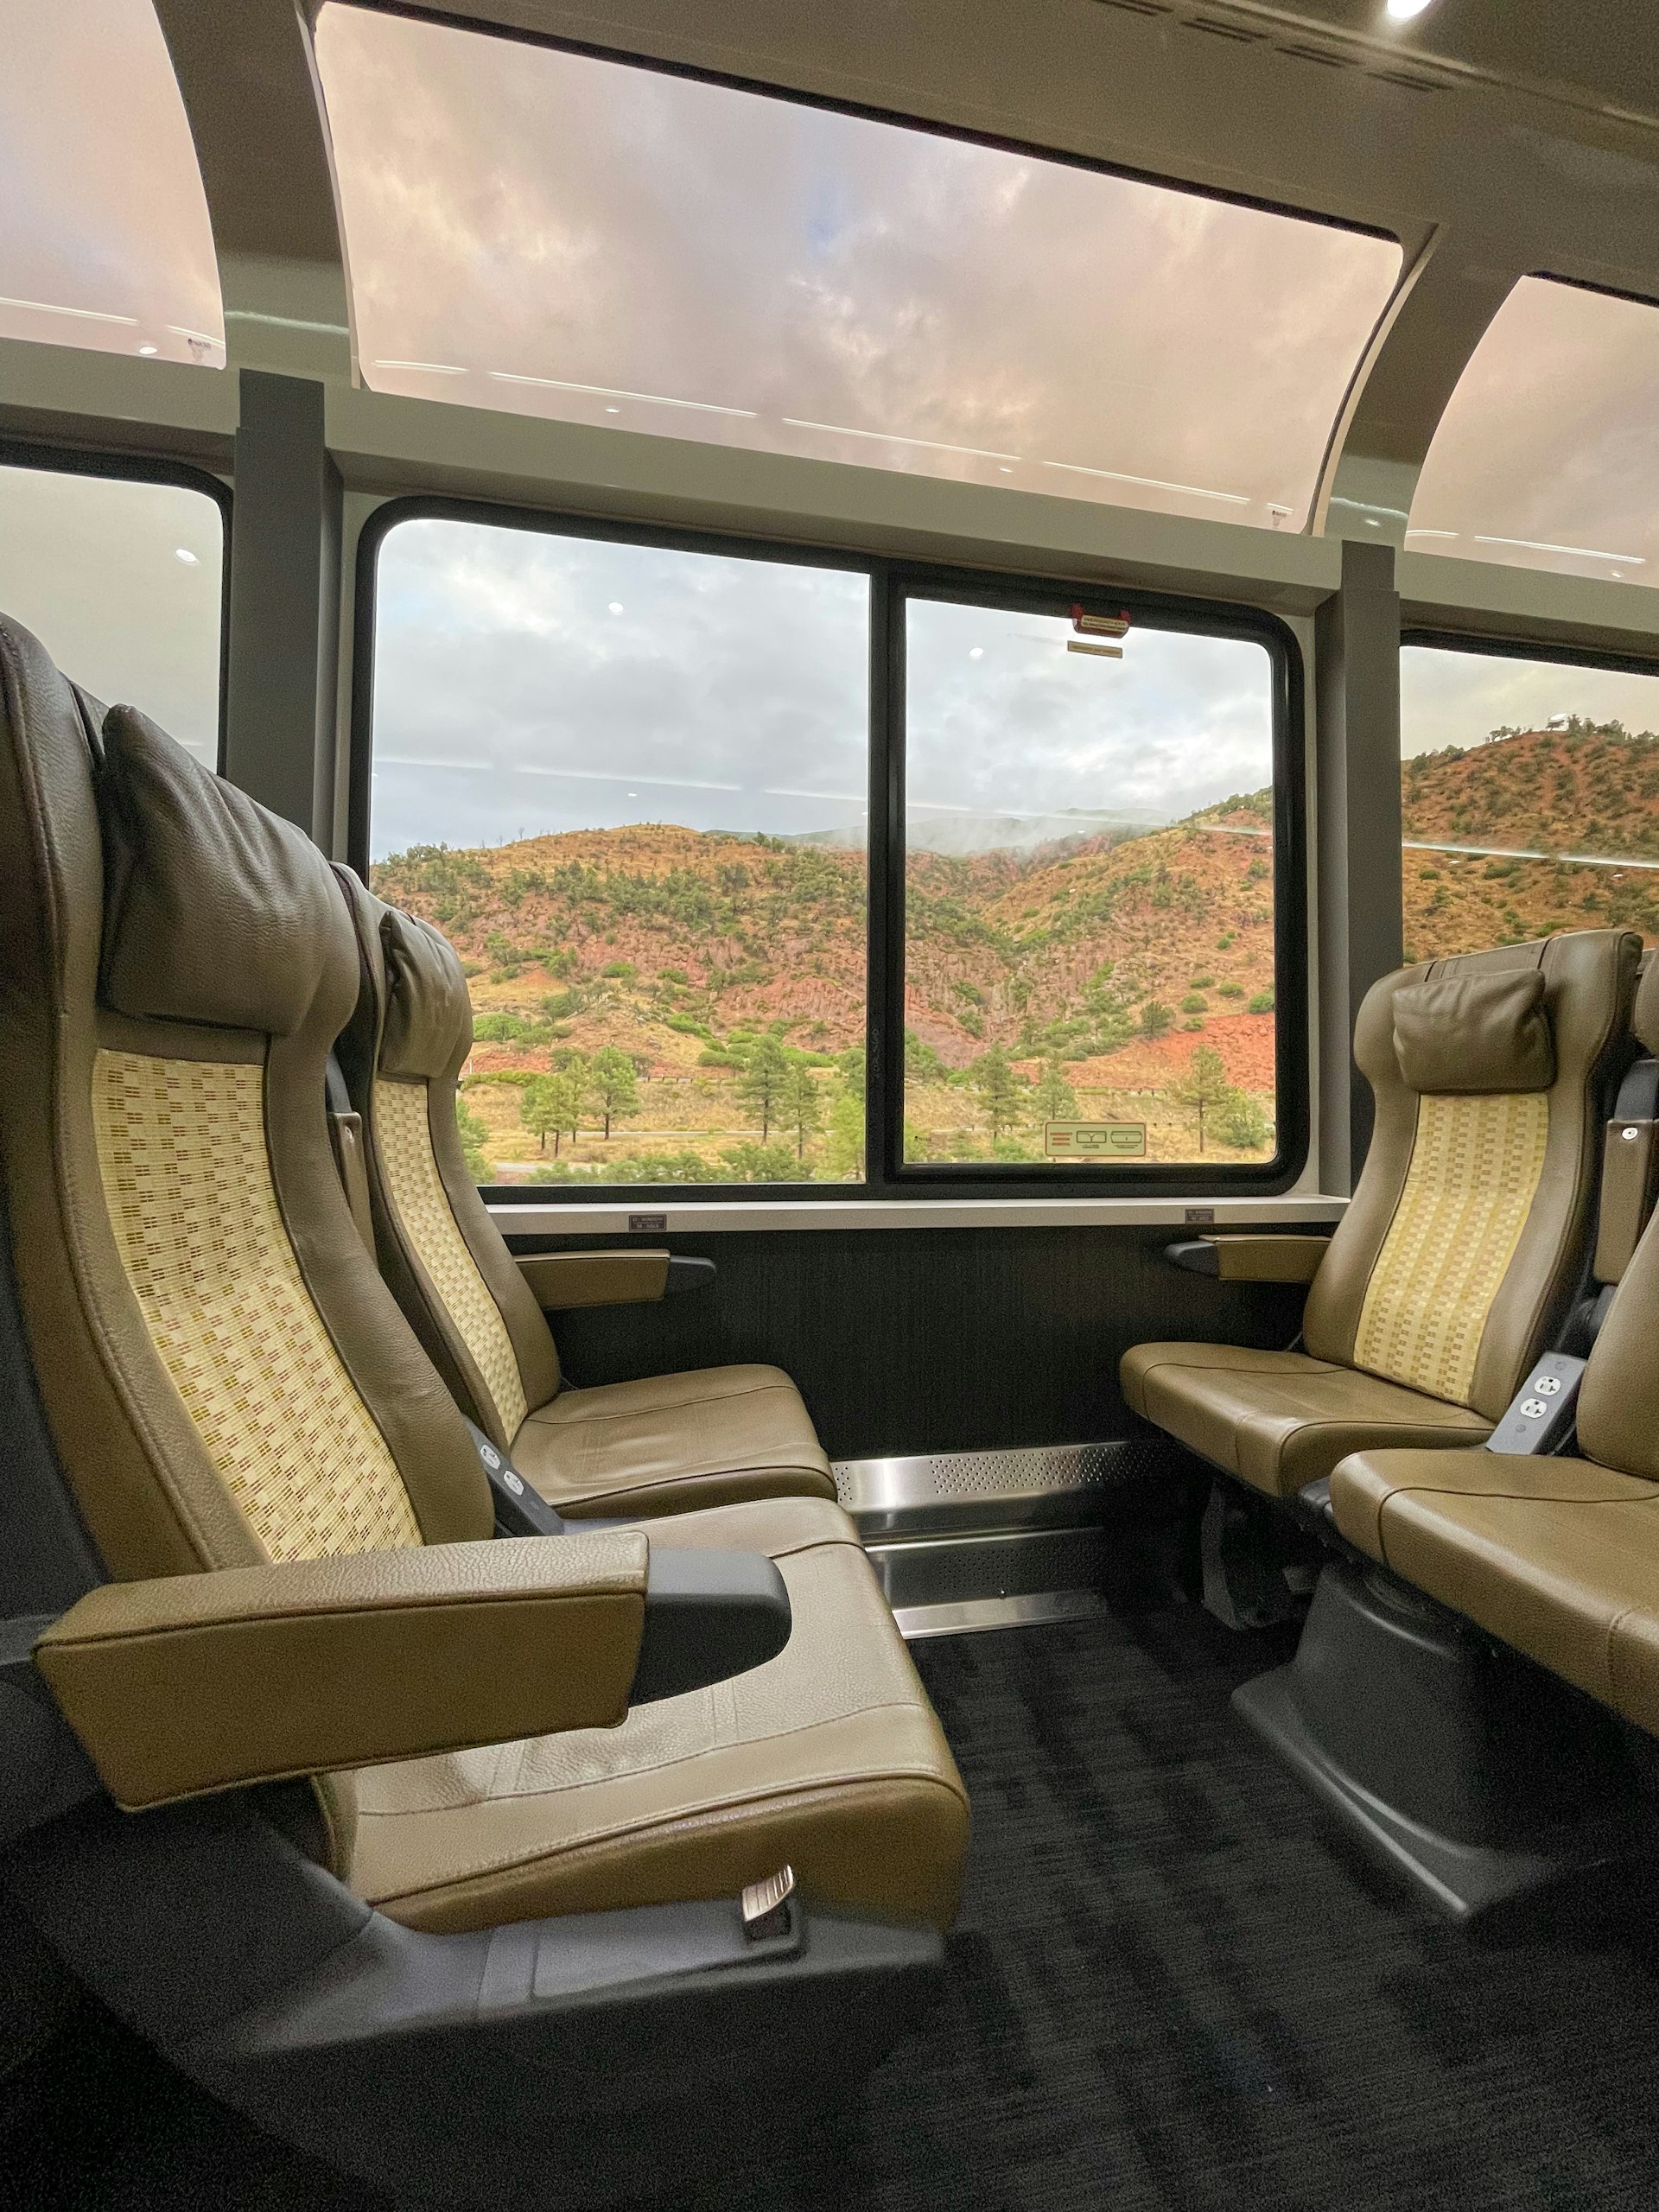 Train seats with large windows